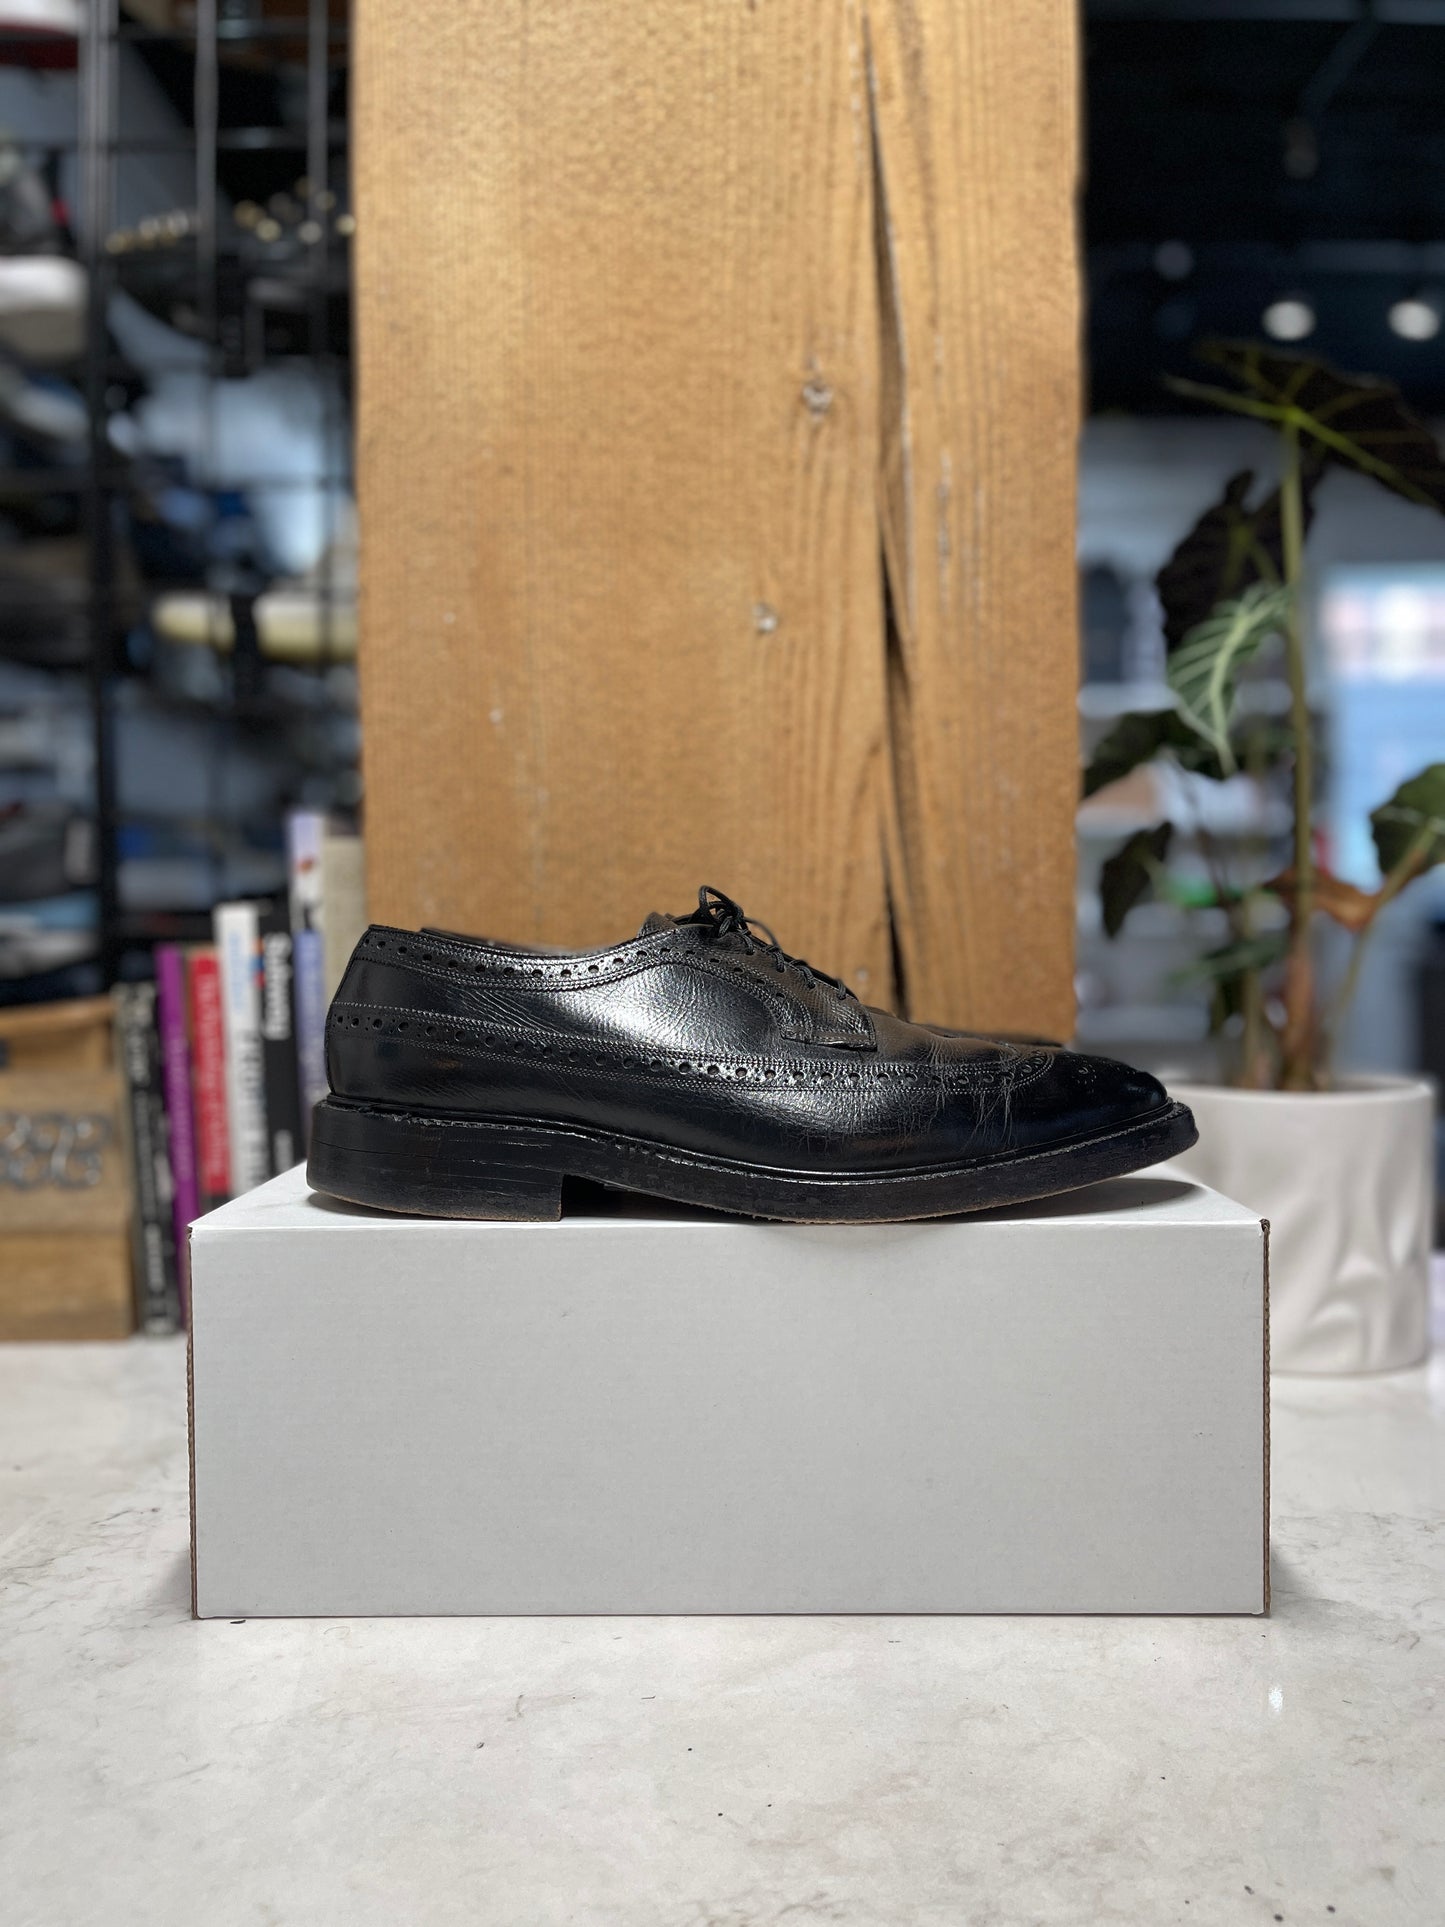 Florsheim Imperial Black Leather Dress Shoes (Size 9)